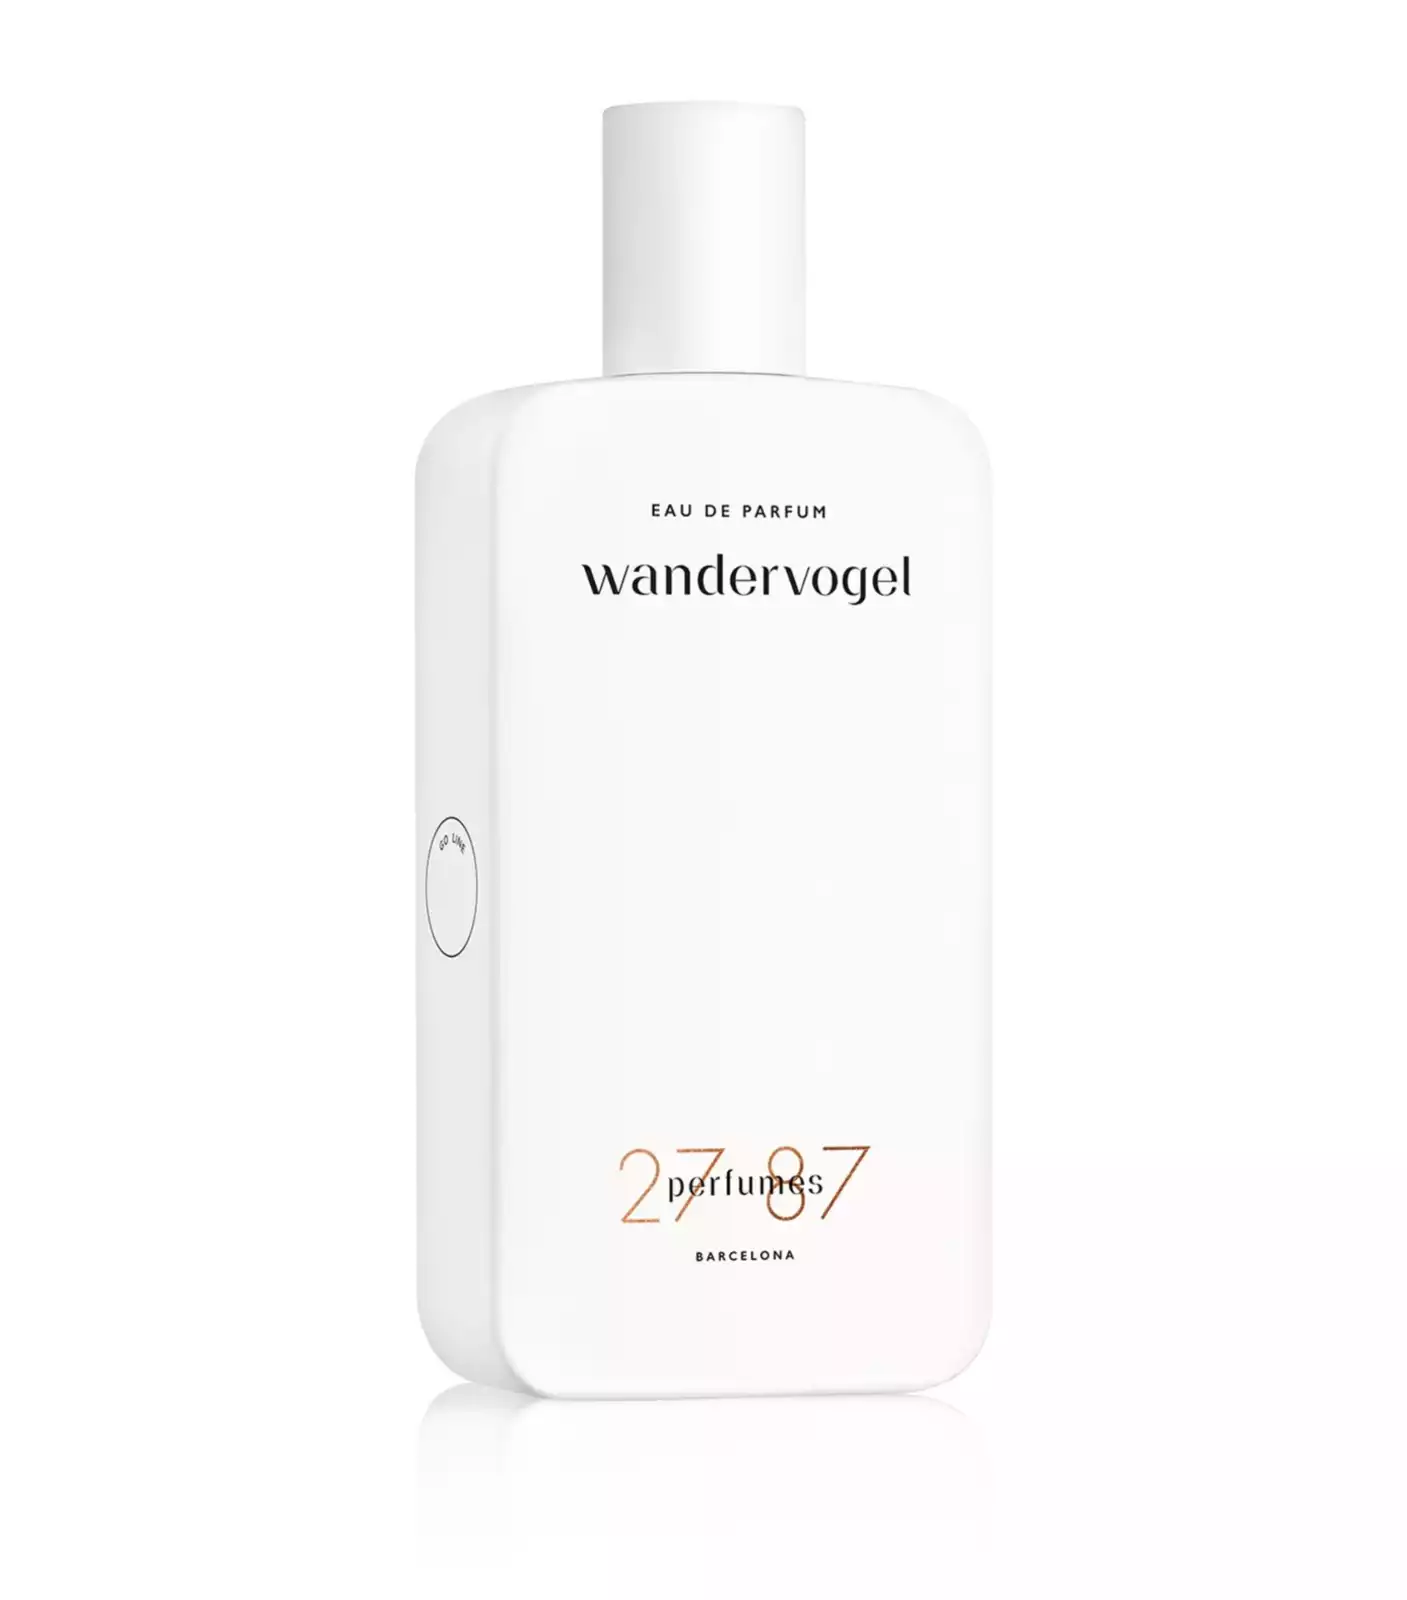 WANDERVOGEL – 27 87 parfumes